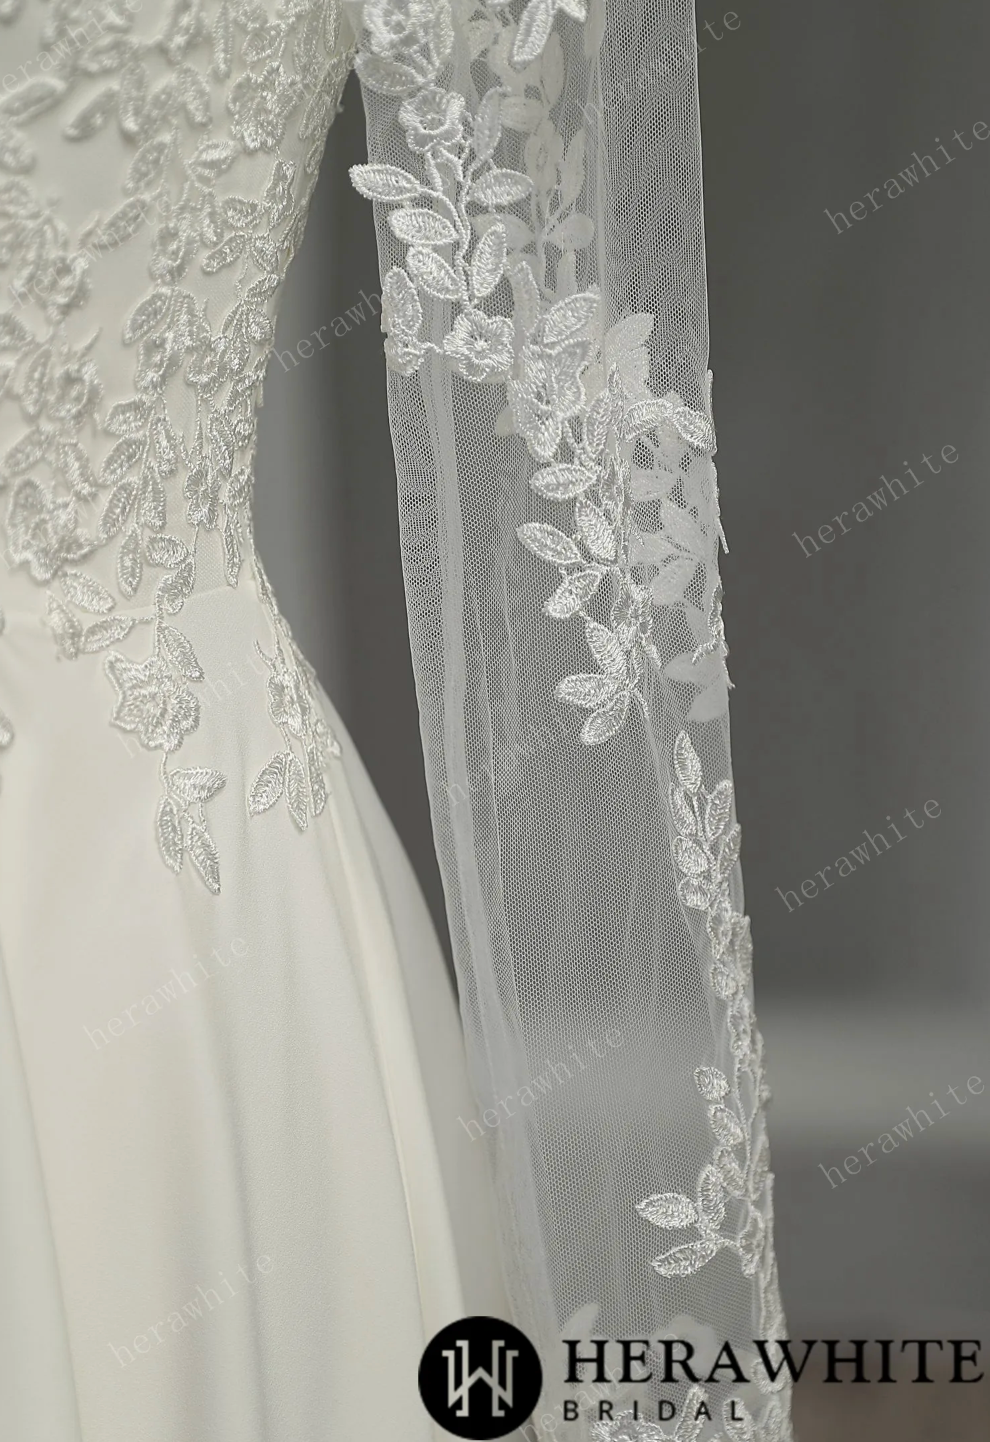 Illusion Lace Long Sleeves Tulle Short Wedding Dress